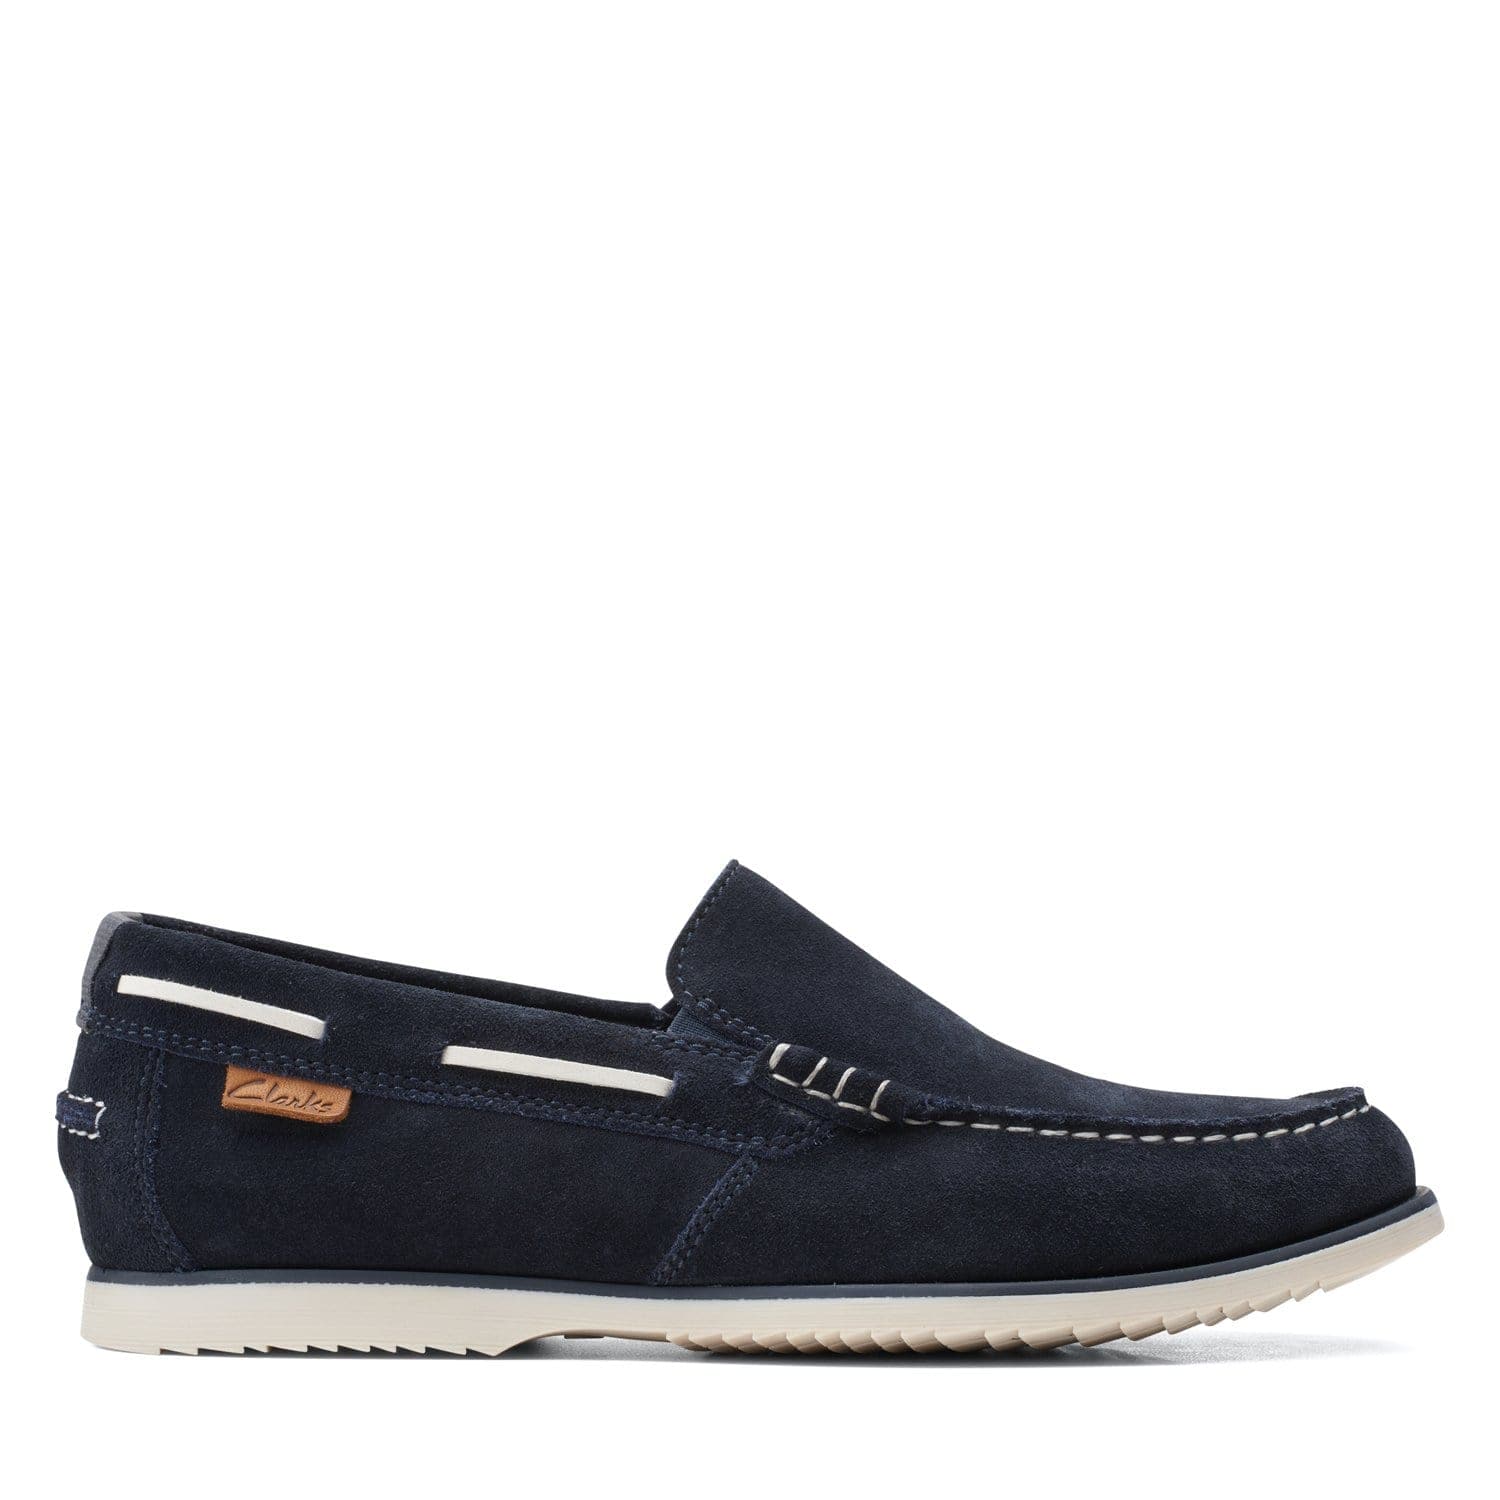 Clarks Noonan Step - Shoes - Navy Suede - 261594737 - G Width (Standard Fit)